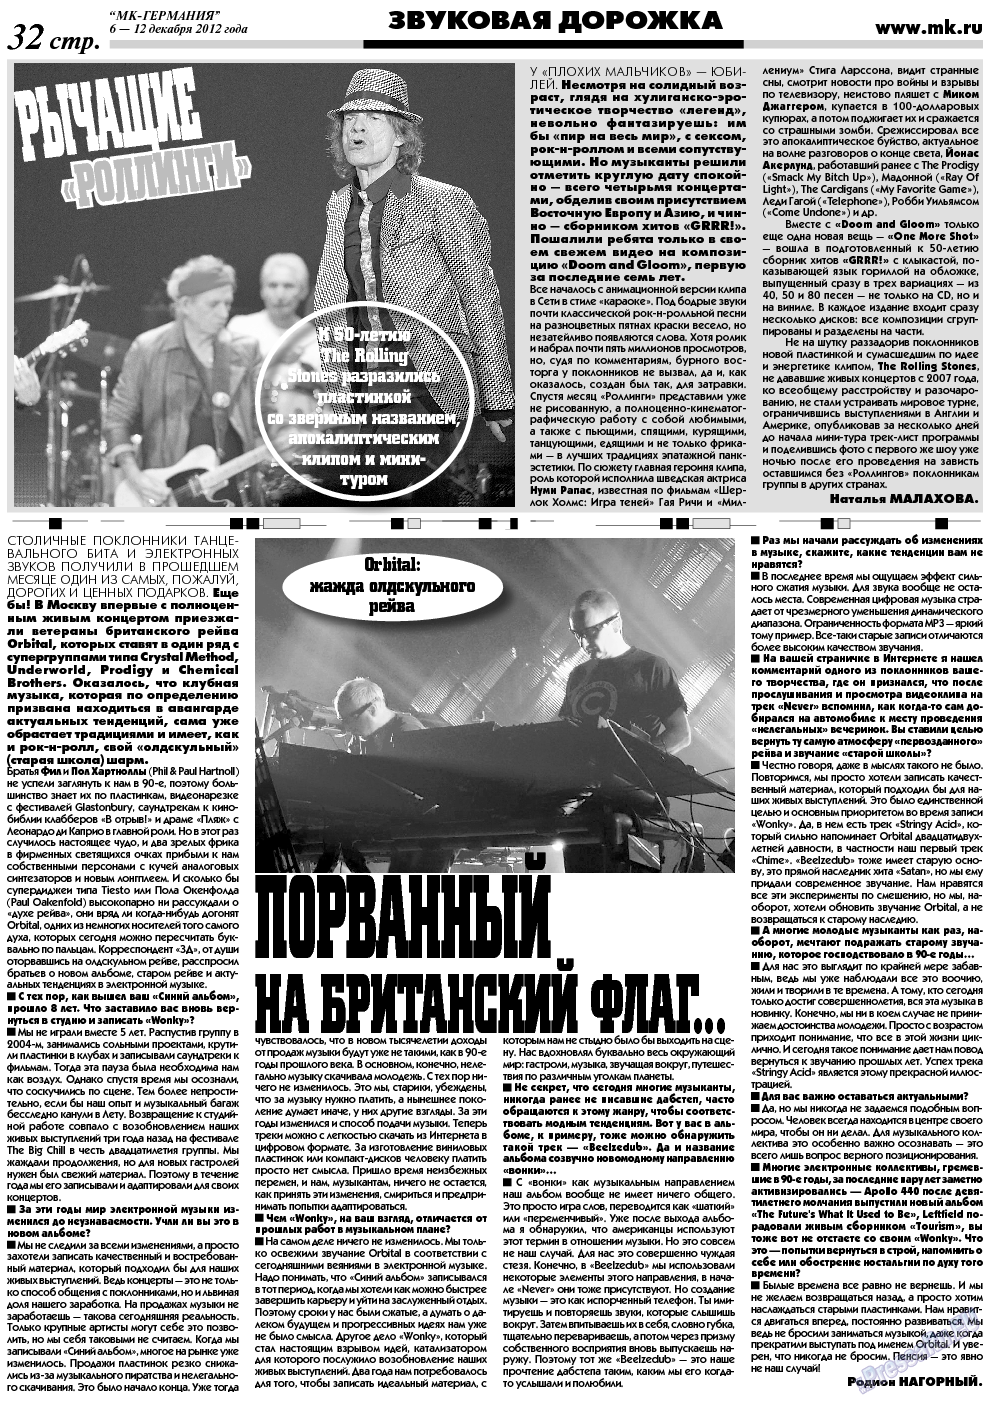 МК-Германия, газета. 2012 №49 стр.32